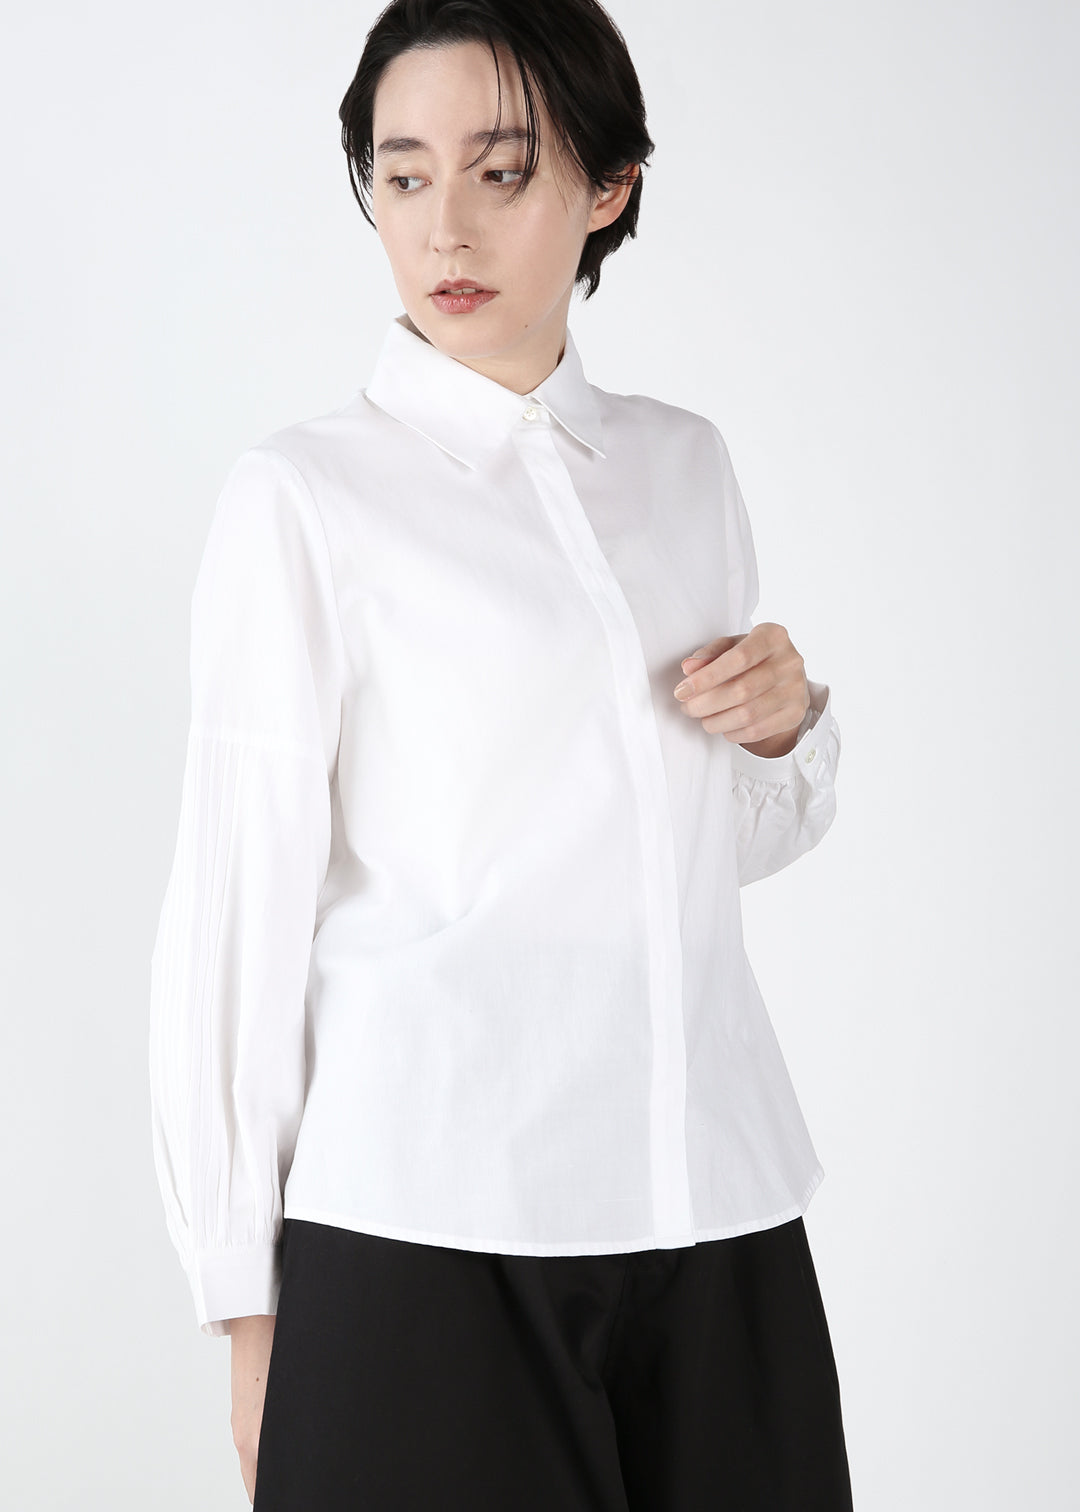 Yui Volume Sleeve Shirt 150tw Khadi